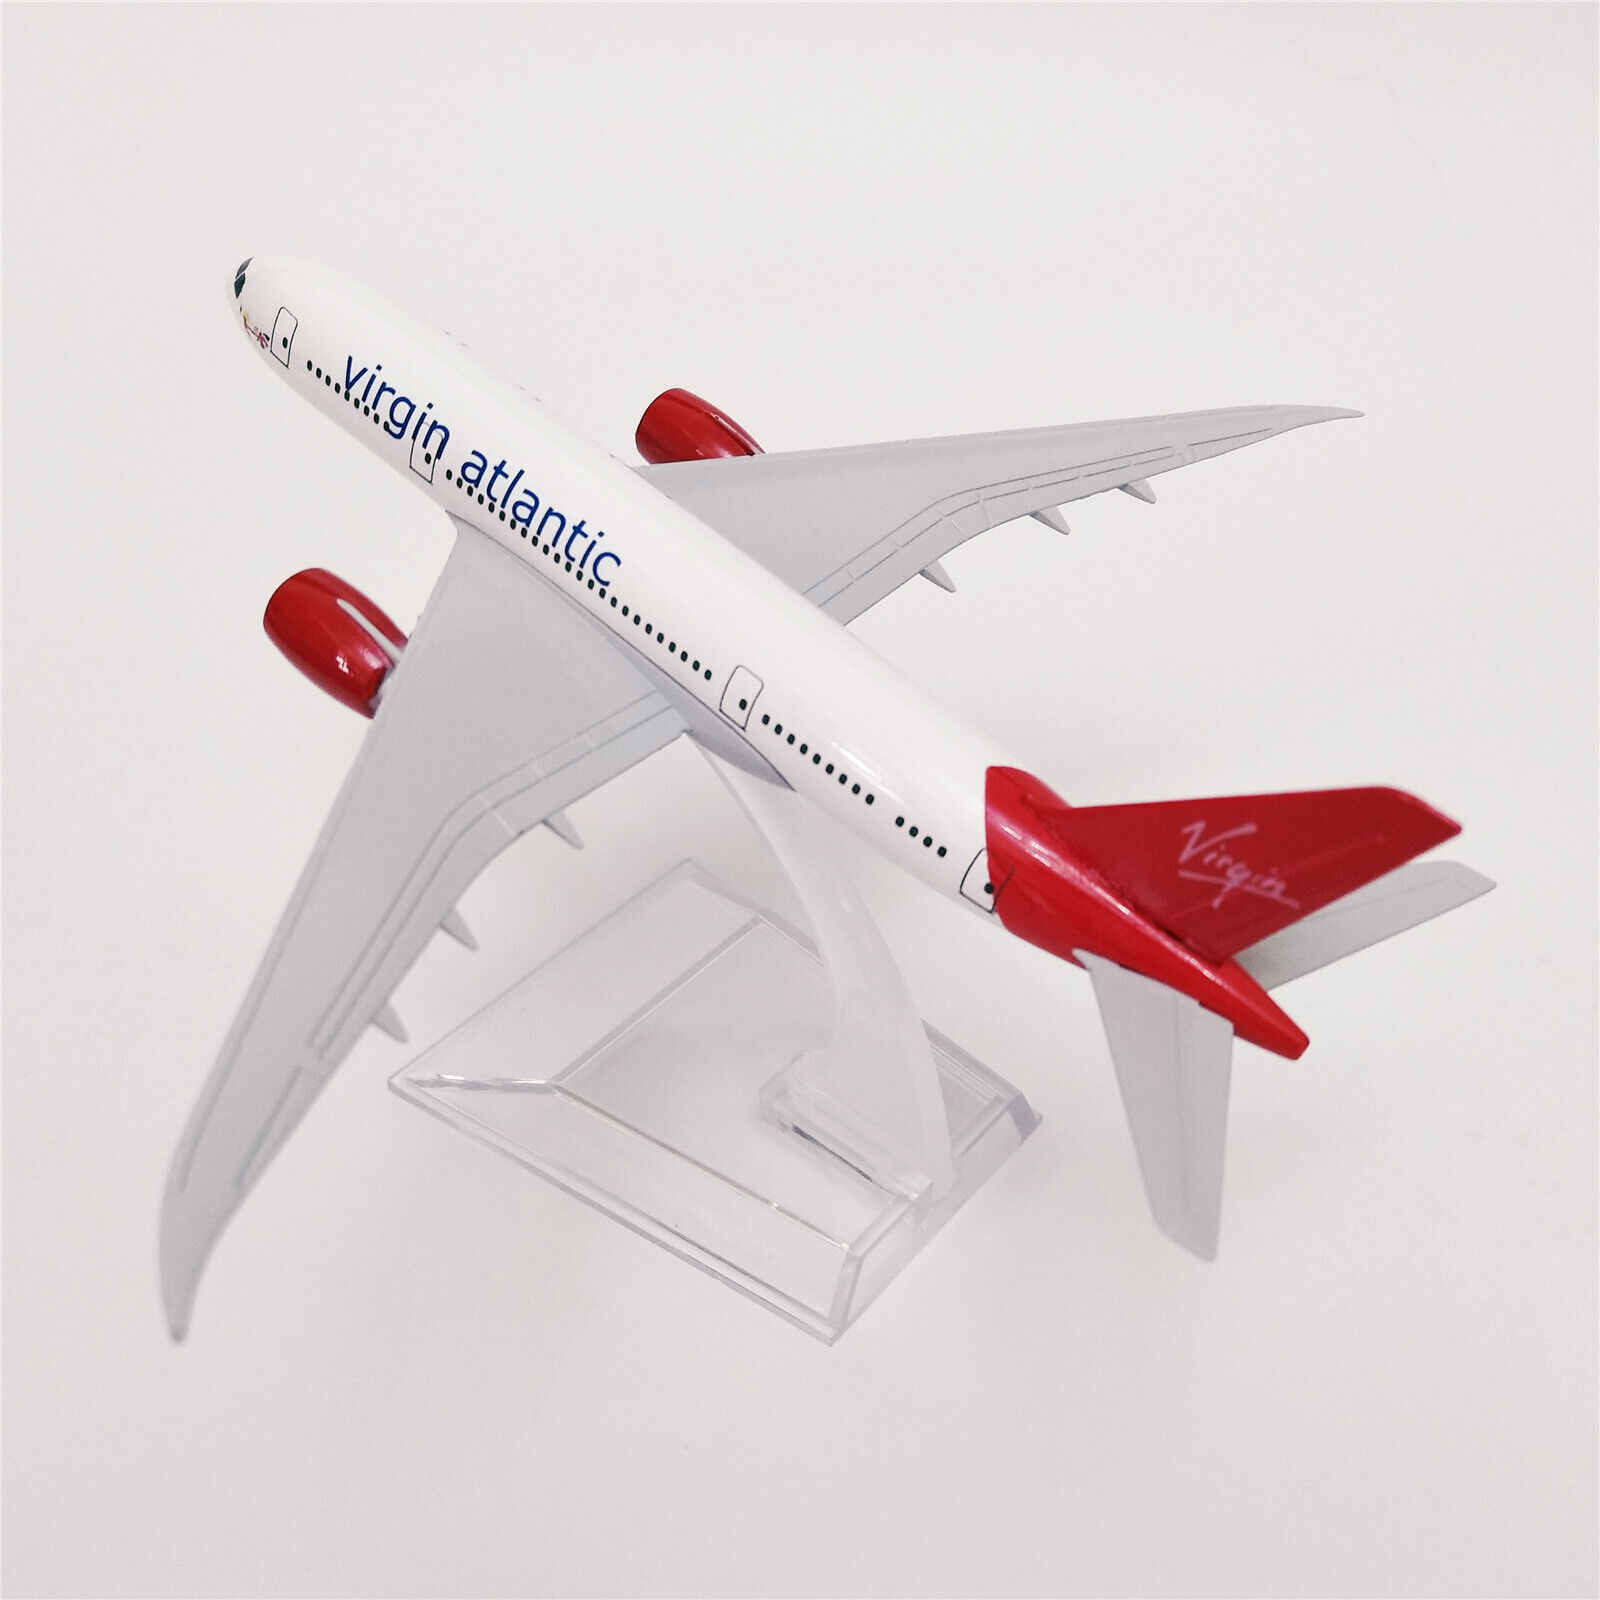 British Virgin Atlantic Boeing B787 Airlines Airplane Model Plane Aircraft 16cm